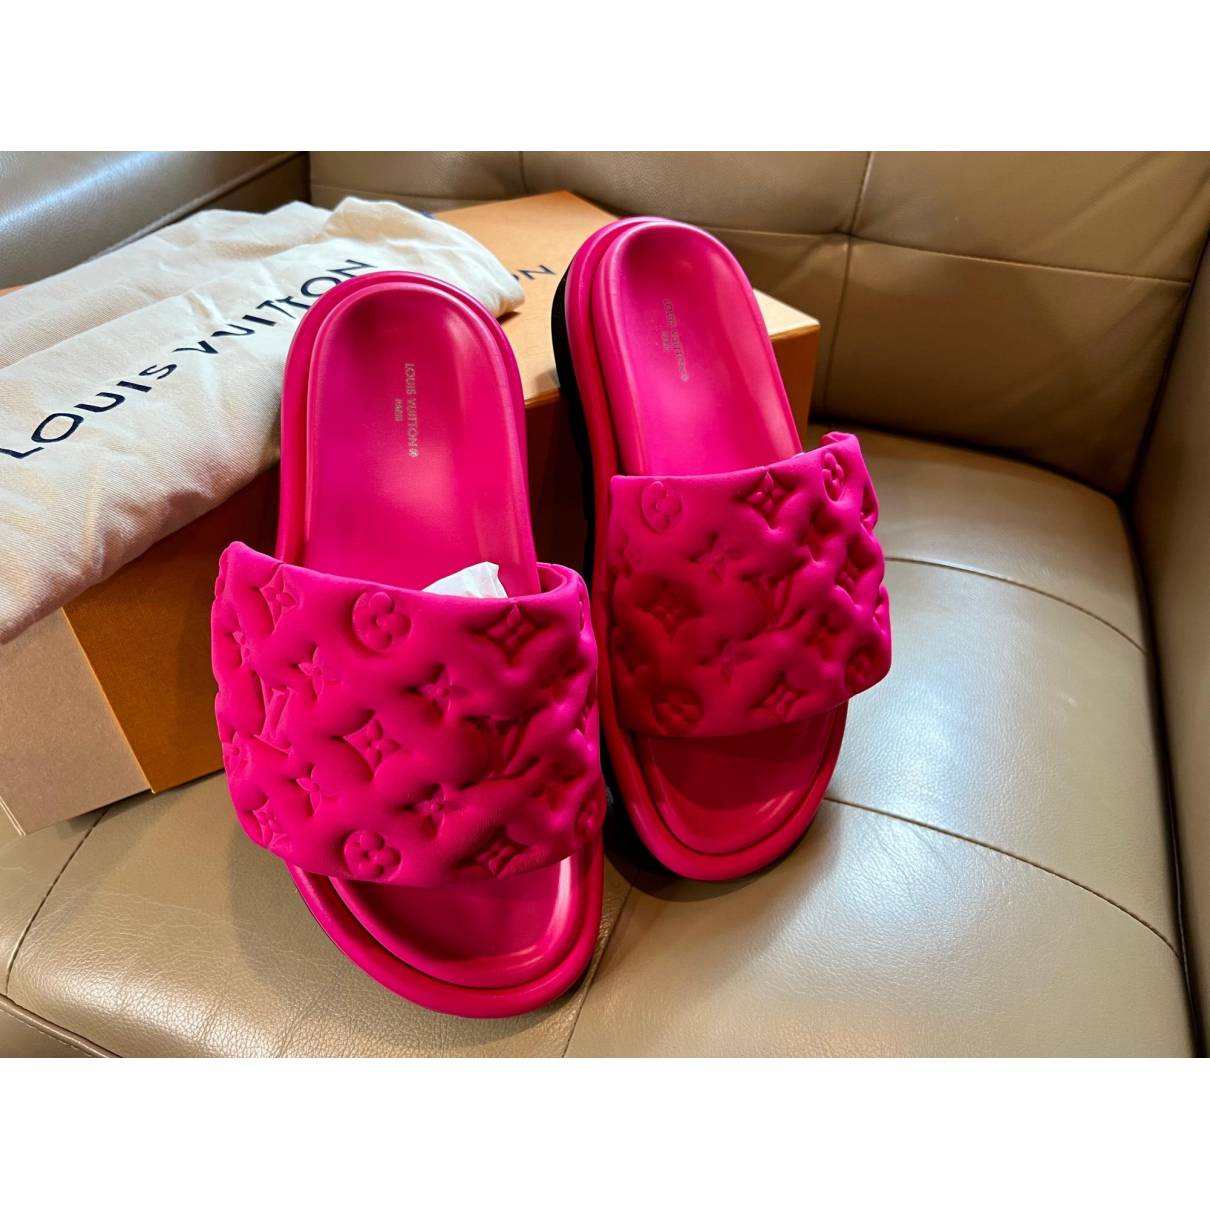 Louis Vuitton Bom Dia Flat Comfort Mule Pink. Size 41.0